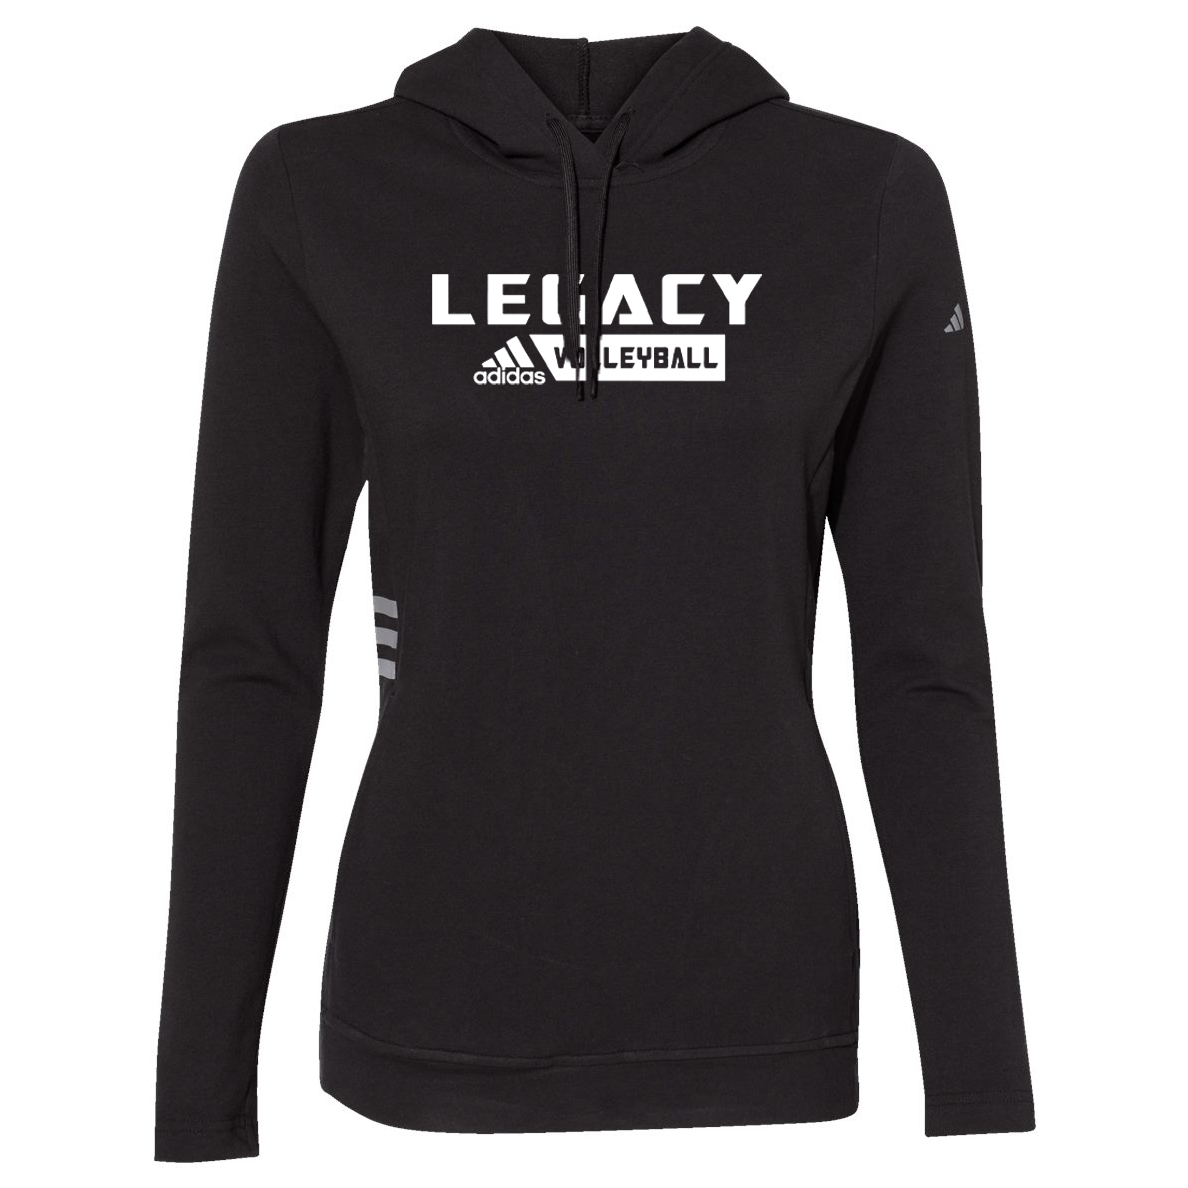 Legacy Volleyball Club Adidas Women's Lightweight Sweatshirt